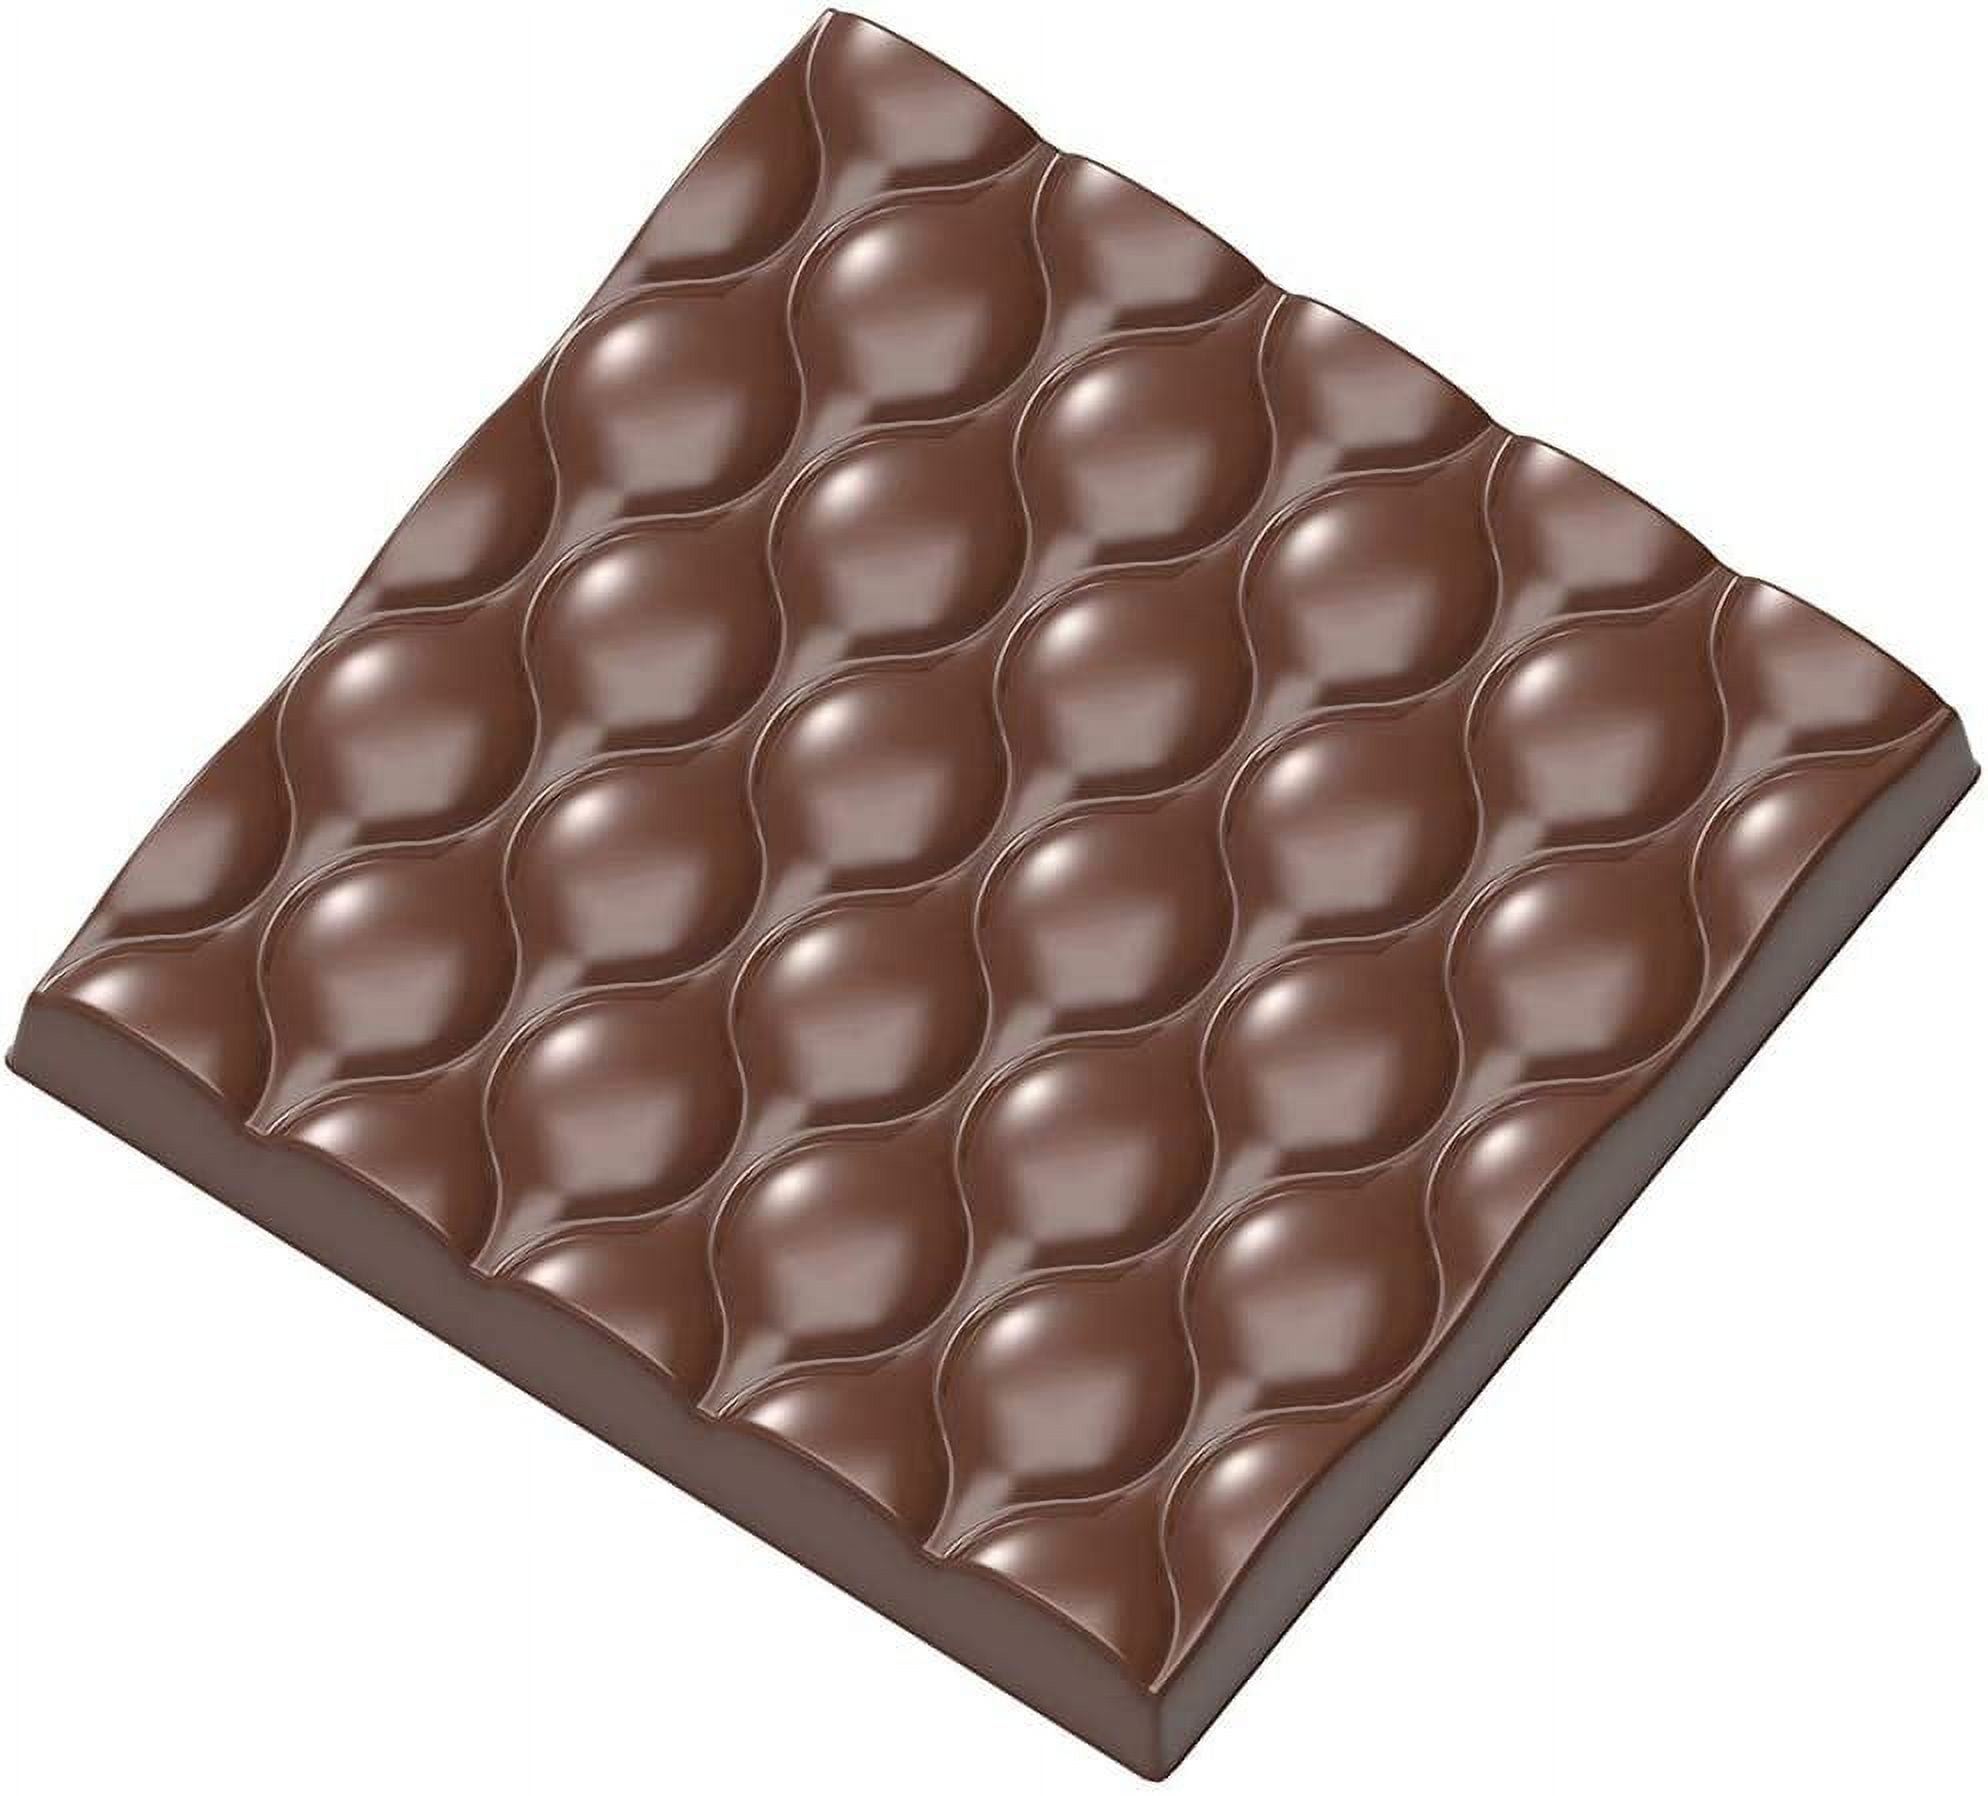 Chocolate World CW2280 Polycarbonate American Truffle Dome Chocola